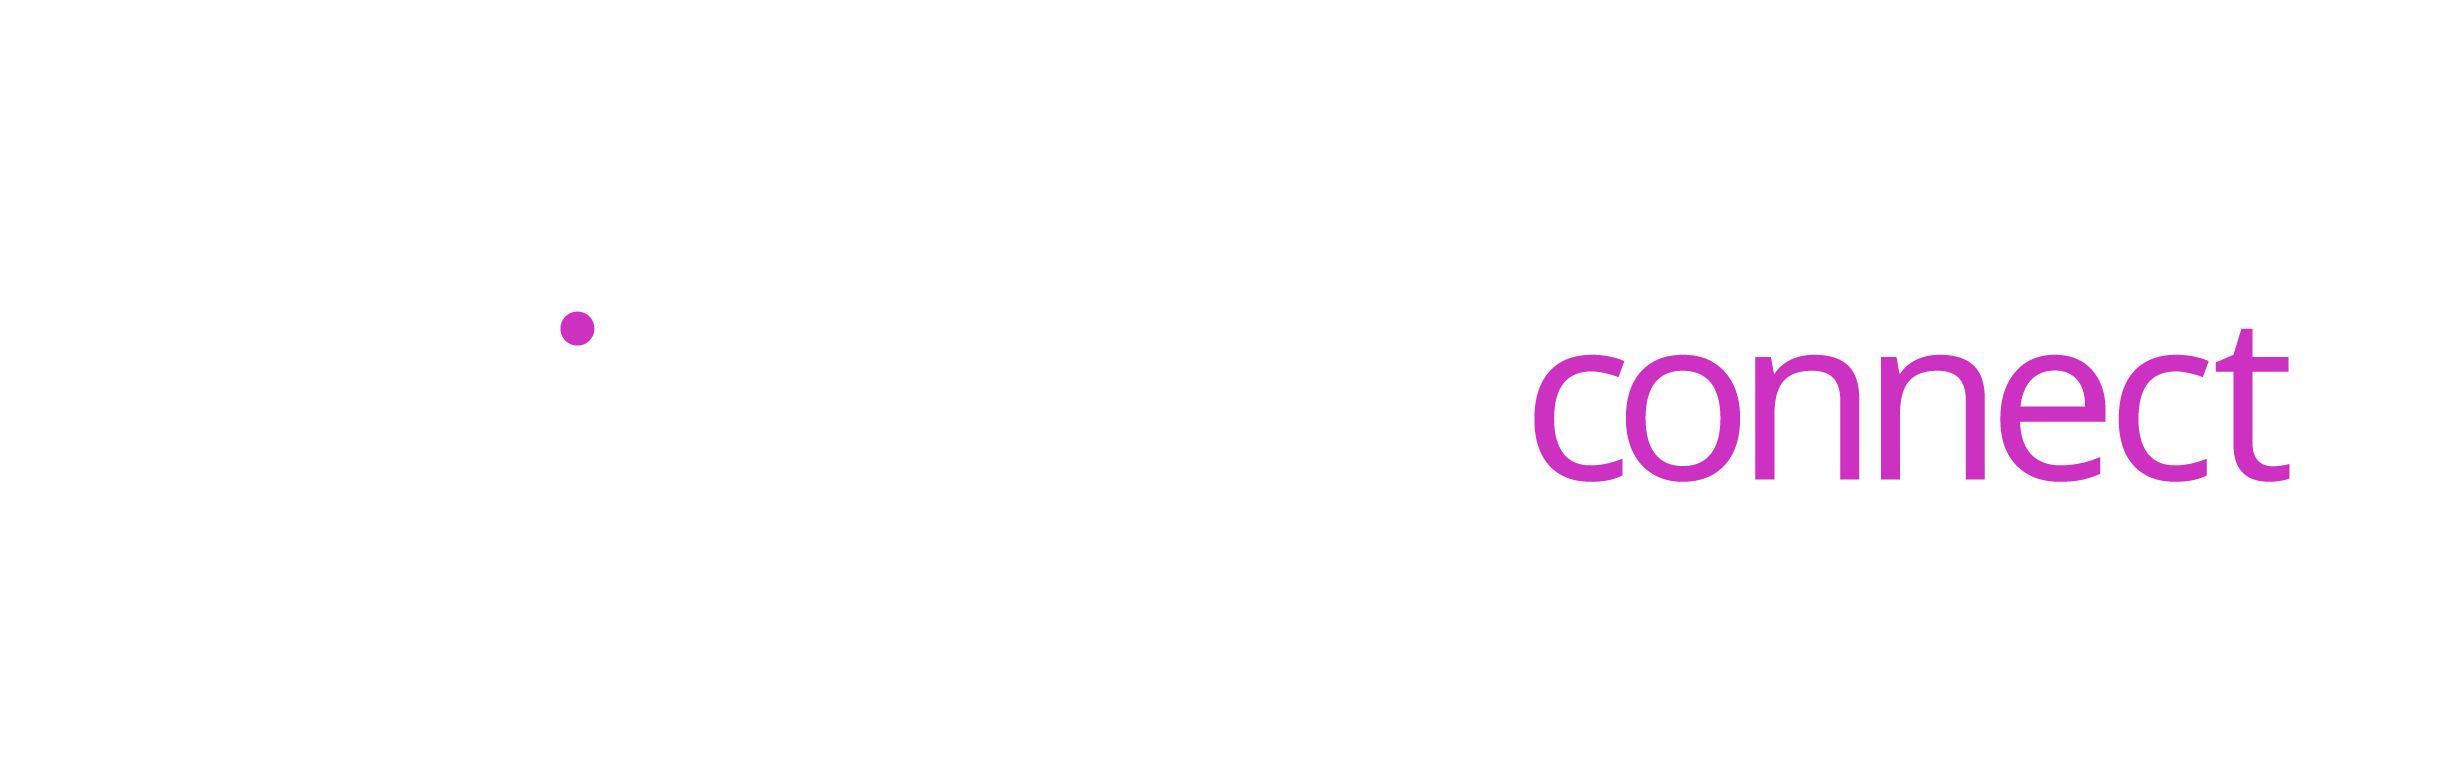 informaconnect logo